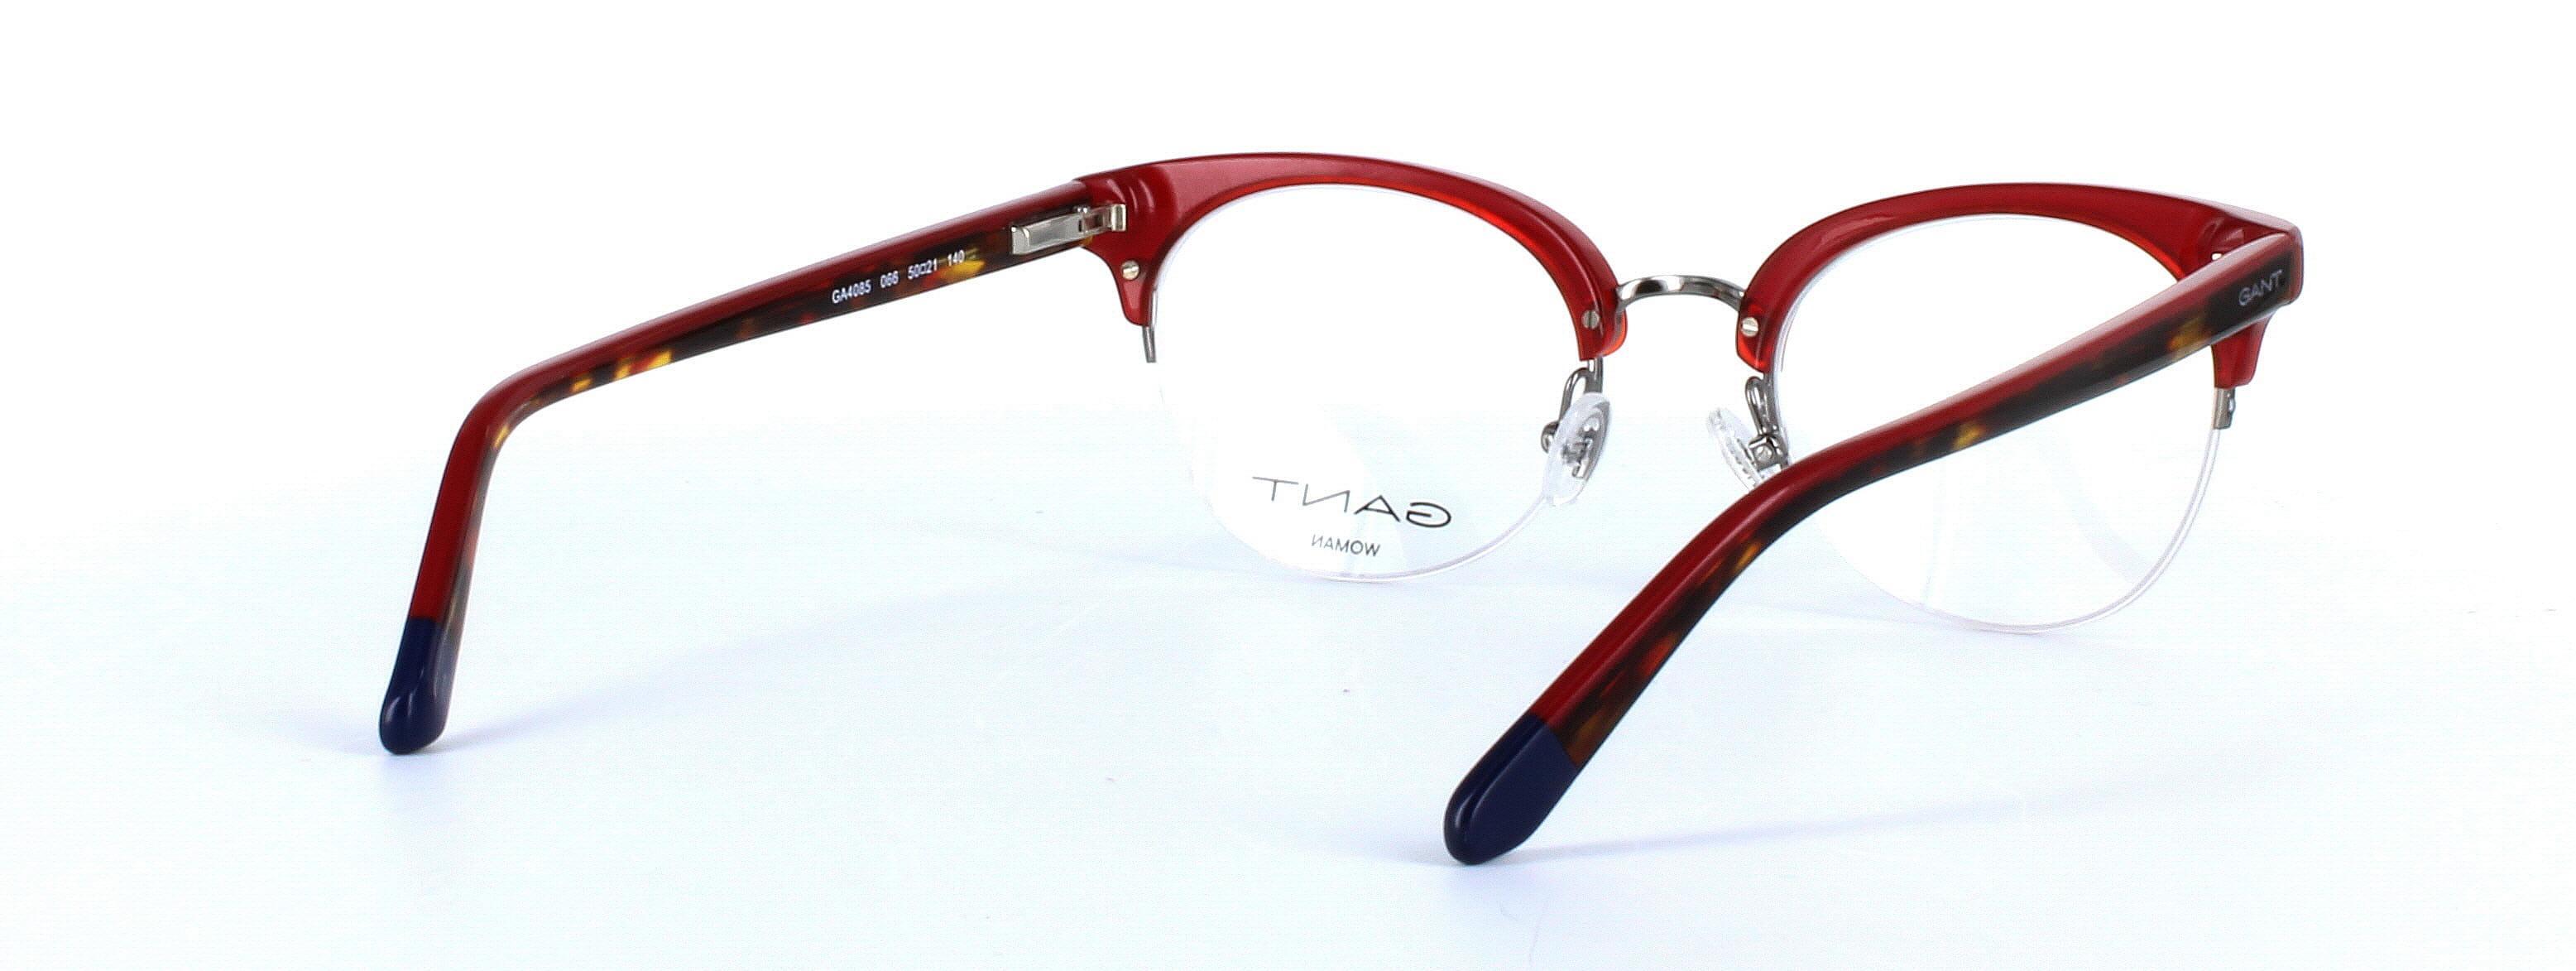 GANT (4085-066) Red Semi Rimless Round Acetate Glasses - Image View 4